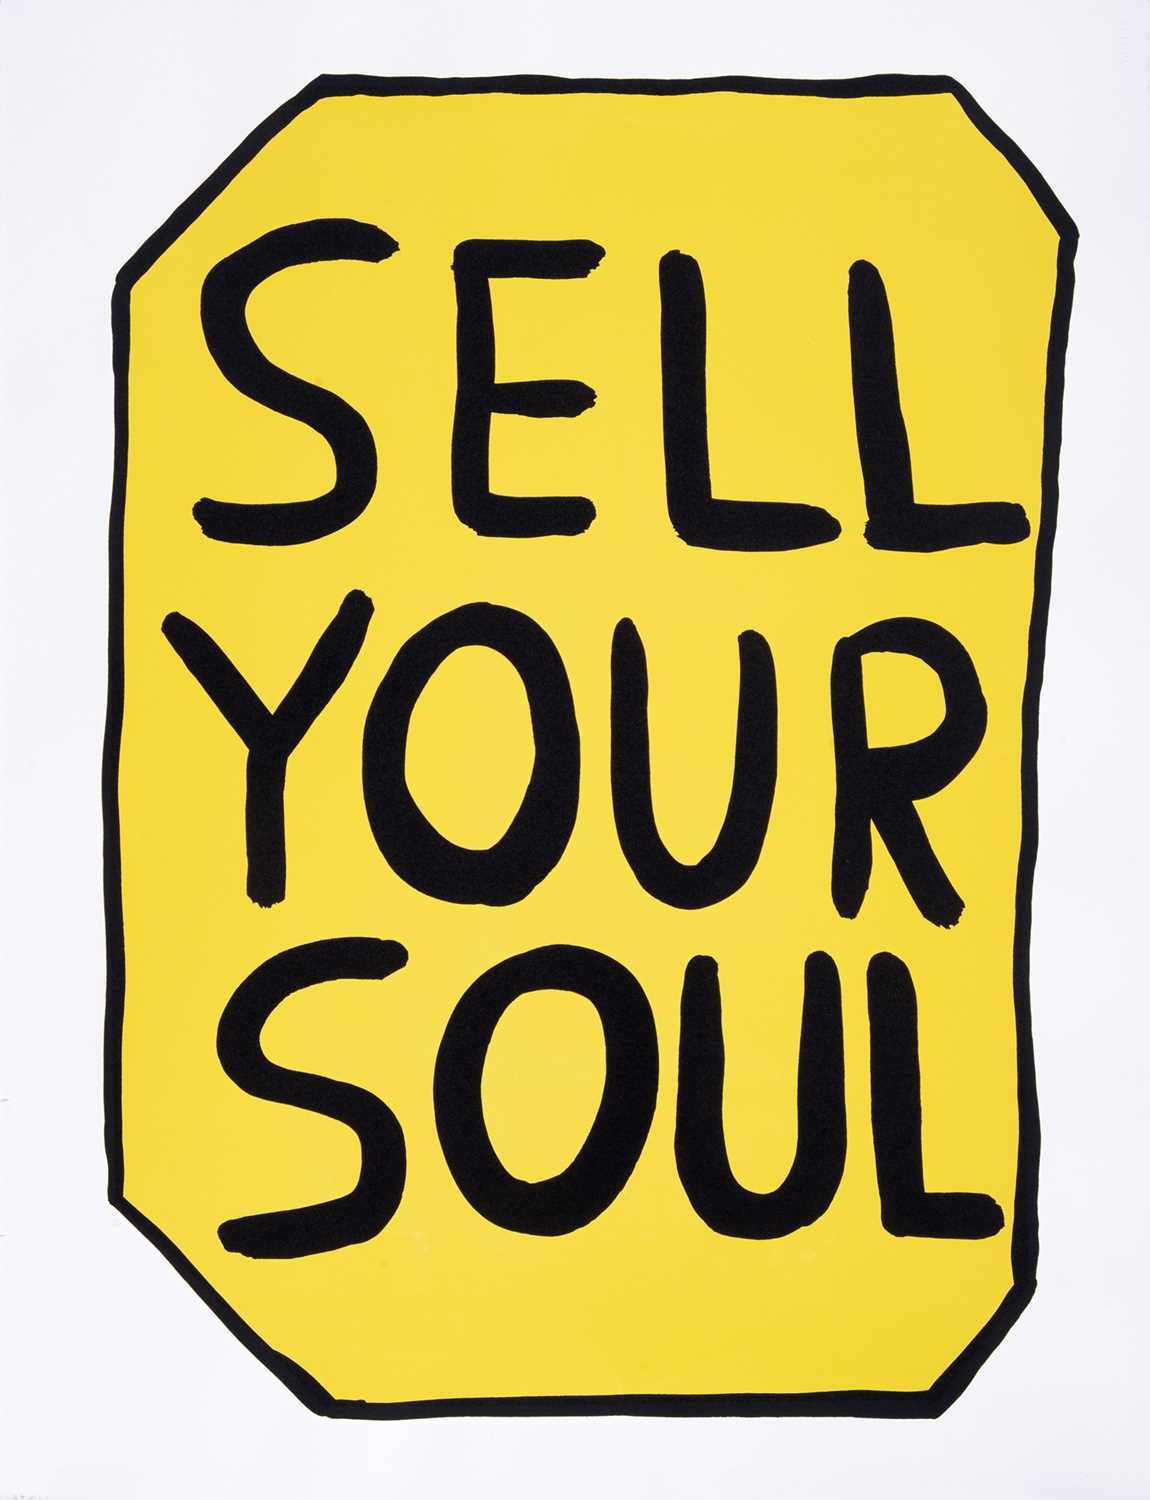 Lot 32 - David Shrigley (British 1968-), 'Sell Your Soul', 2012